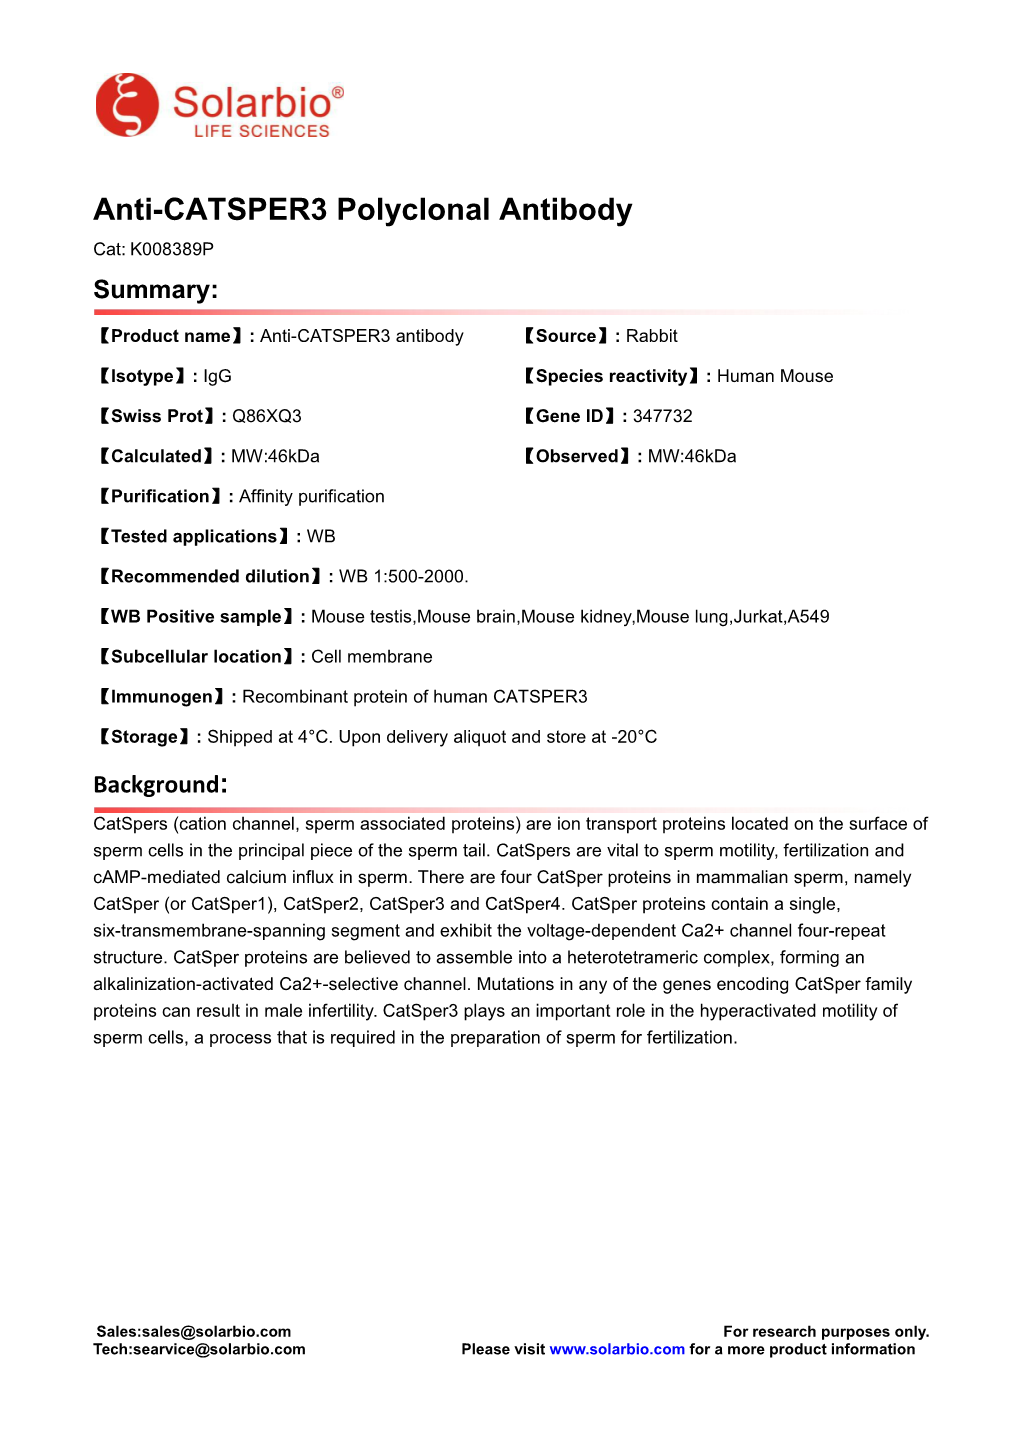 Anti-CATSPER3 Polyclonal Antibody Cat: K008389P Summary